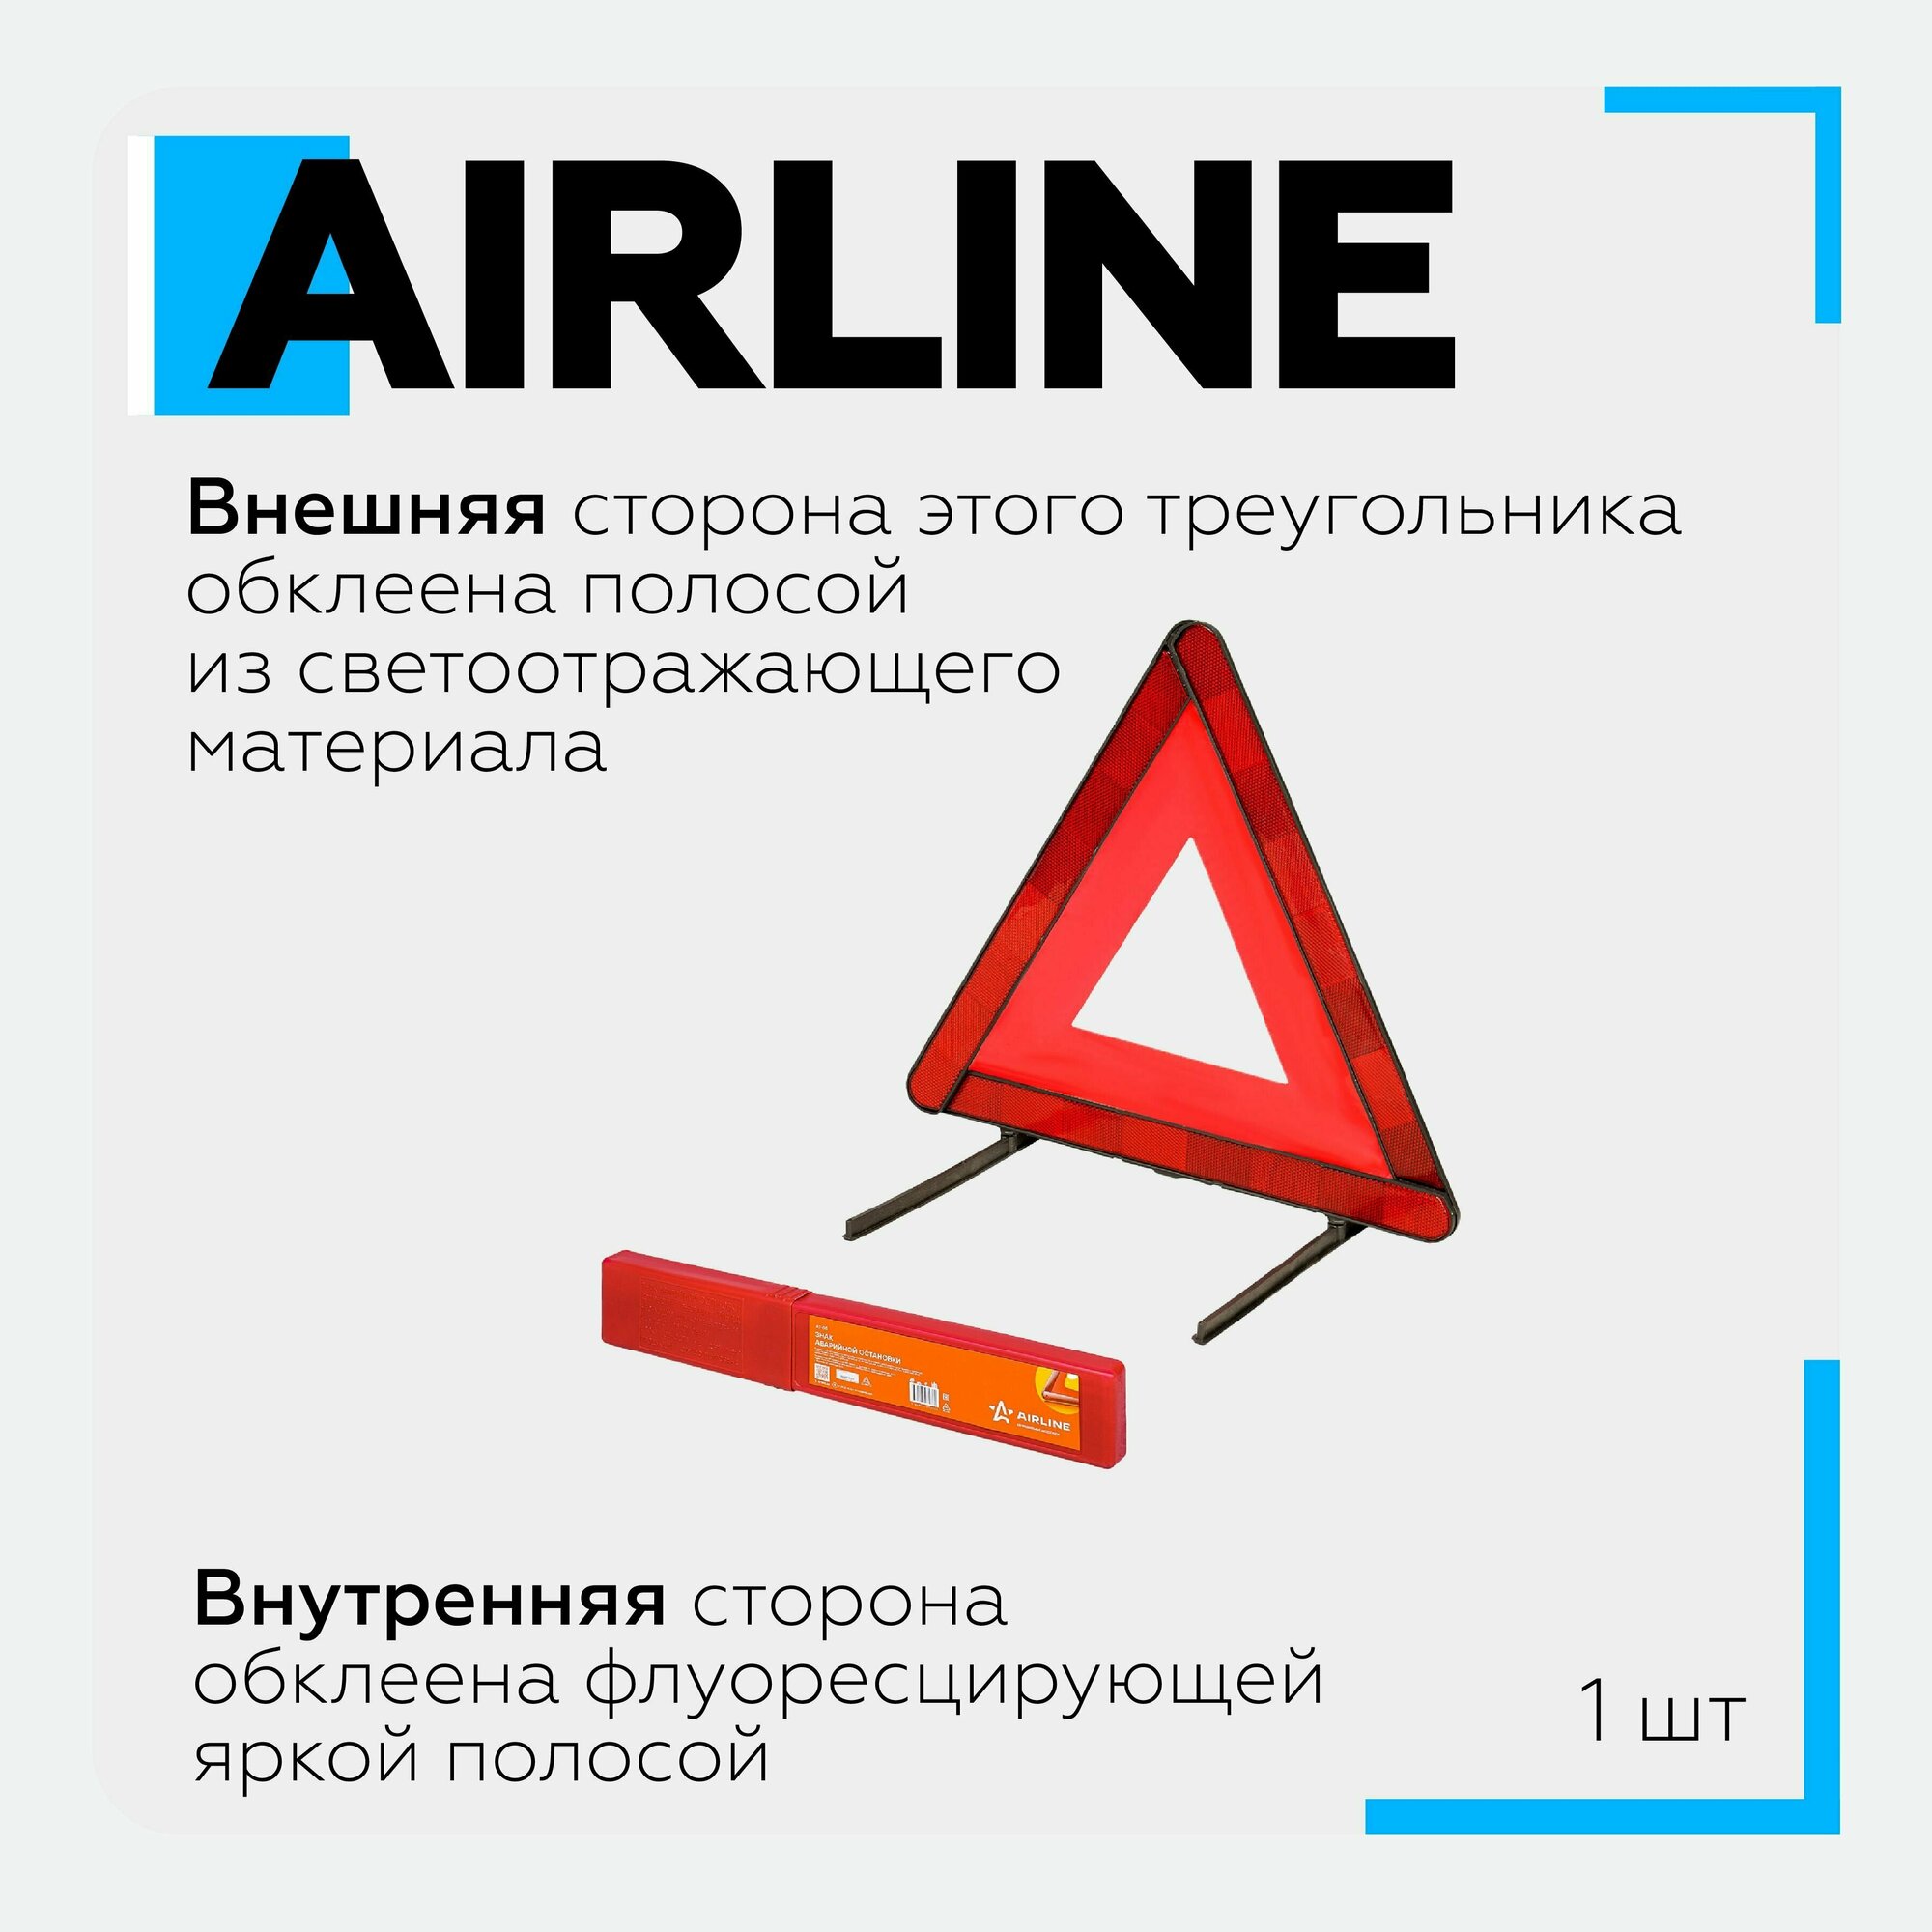 Знак аварийной остановки Airline - фото №12